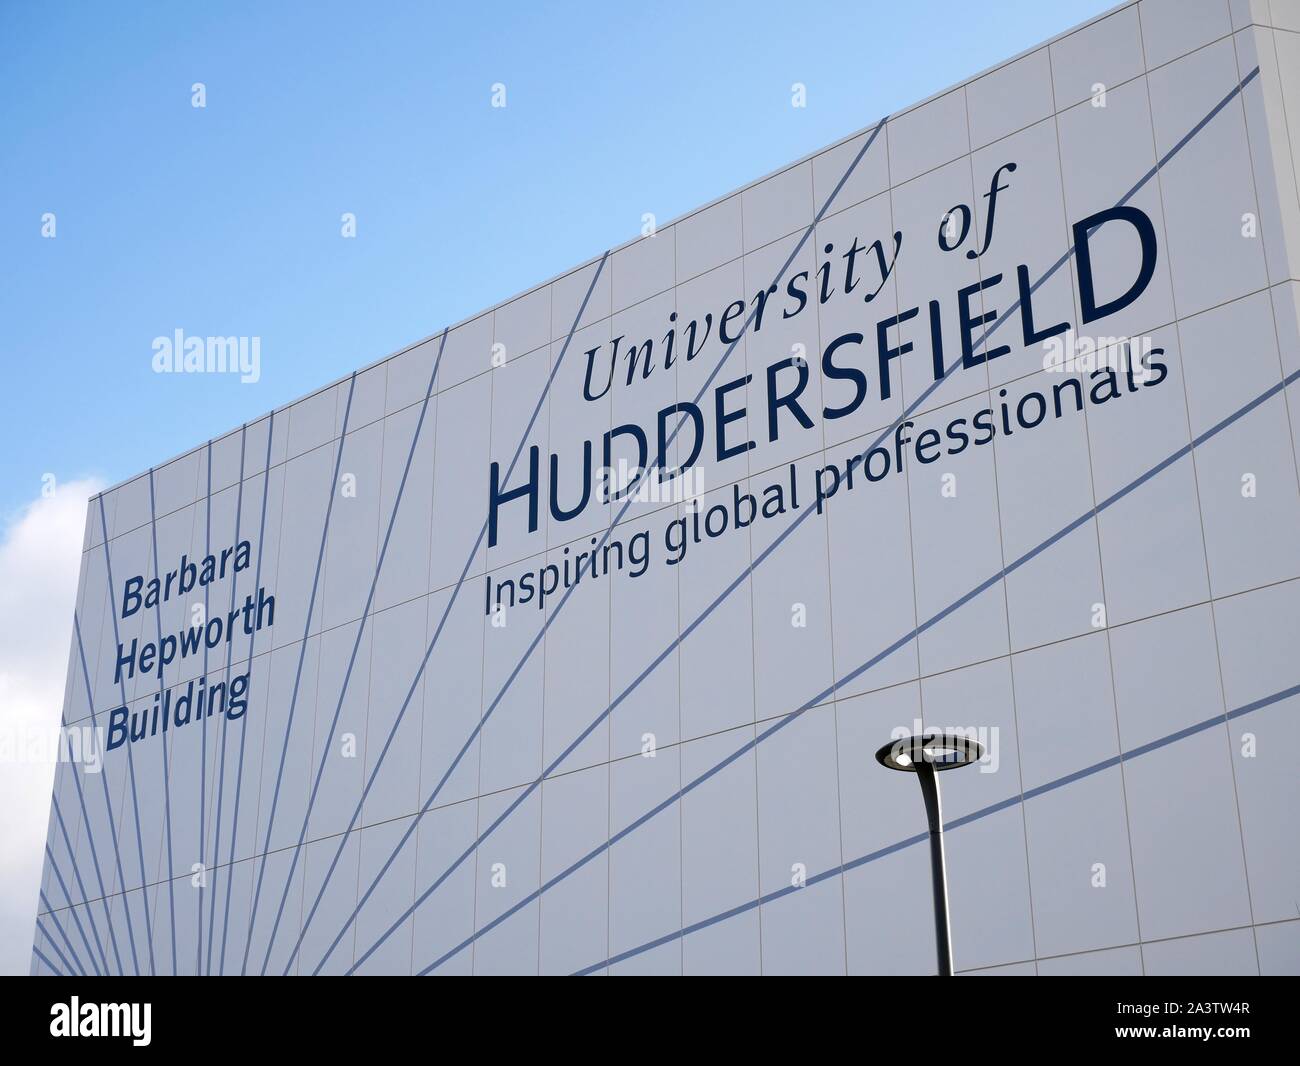 Die Barbarb Hepworth Building an der Universität Huddersfield inspirierende Global Professionals Yorkshire England Stockfoto